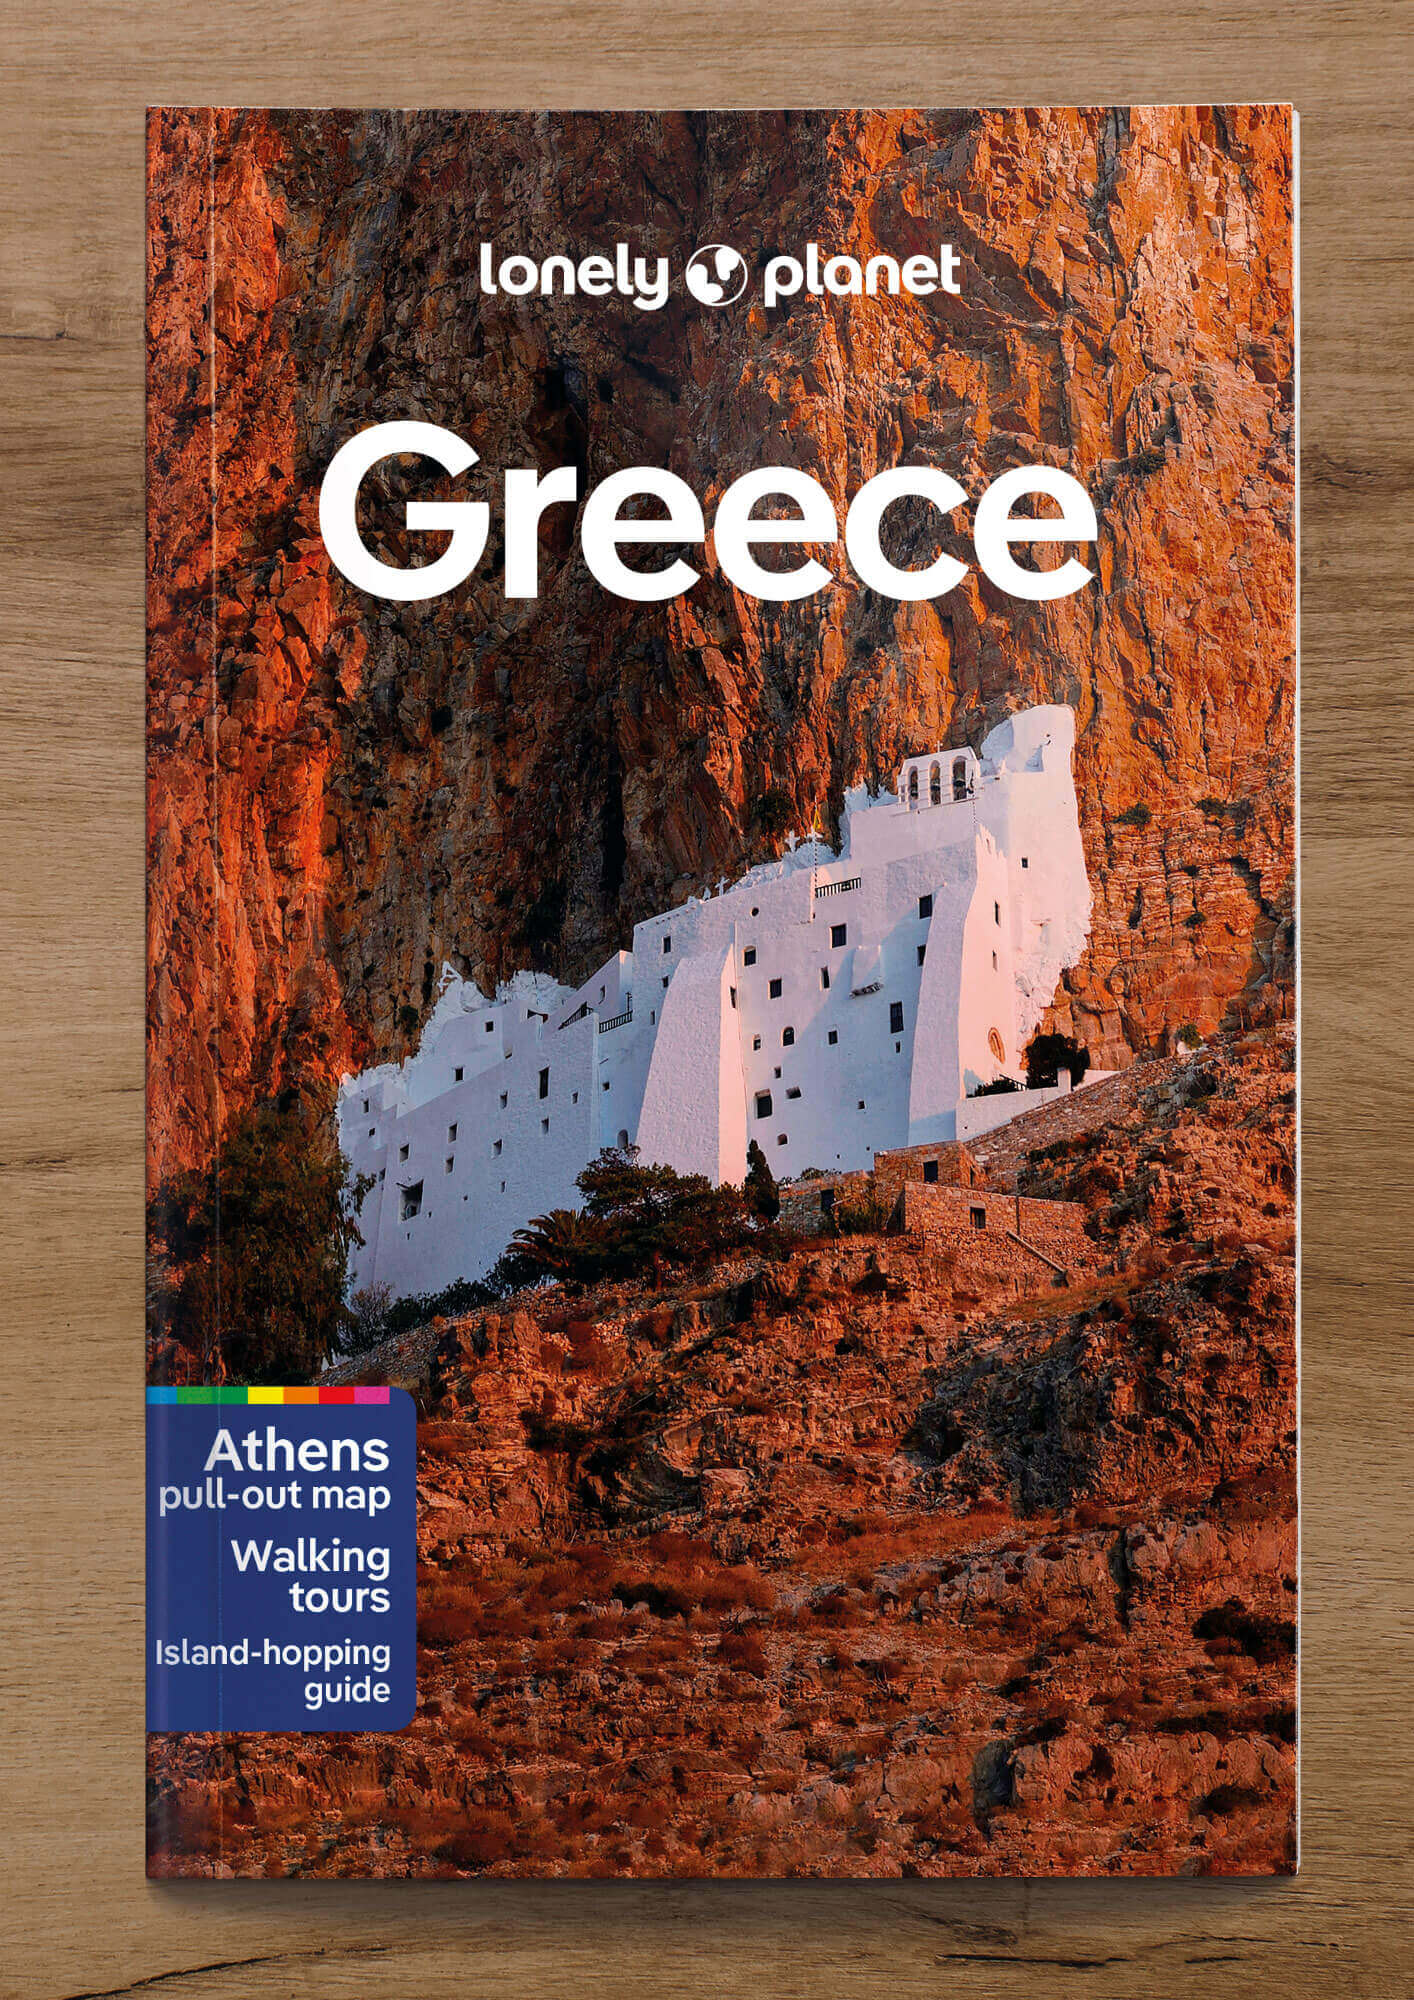  Bestselling Lonelyplanet ebook bundle - Greece